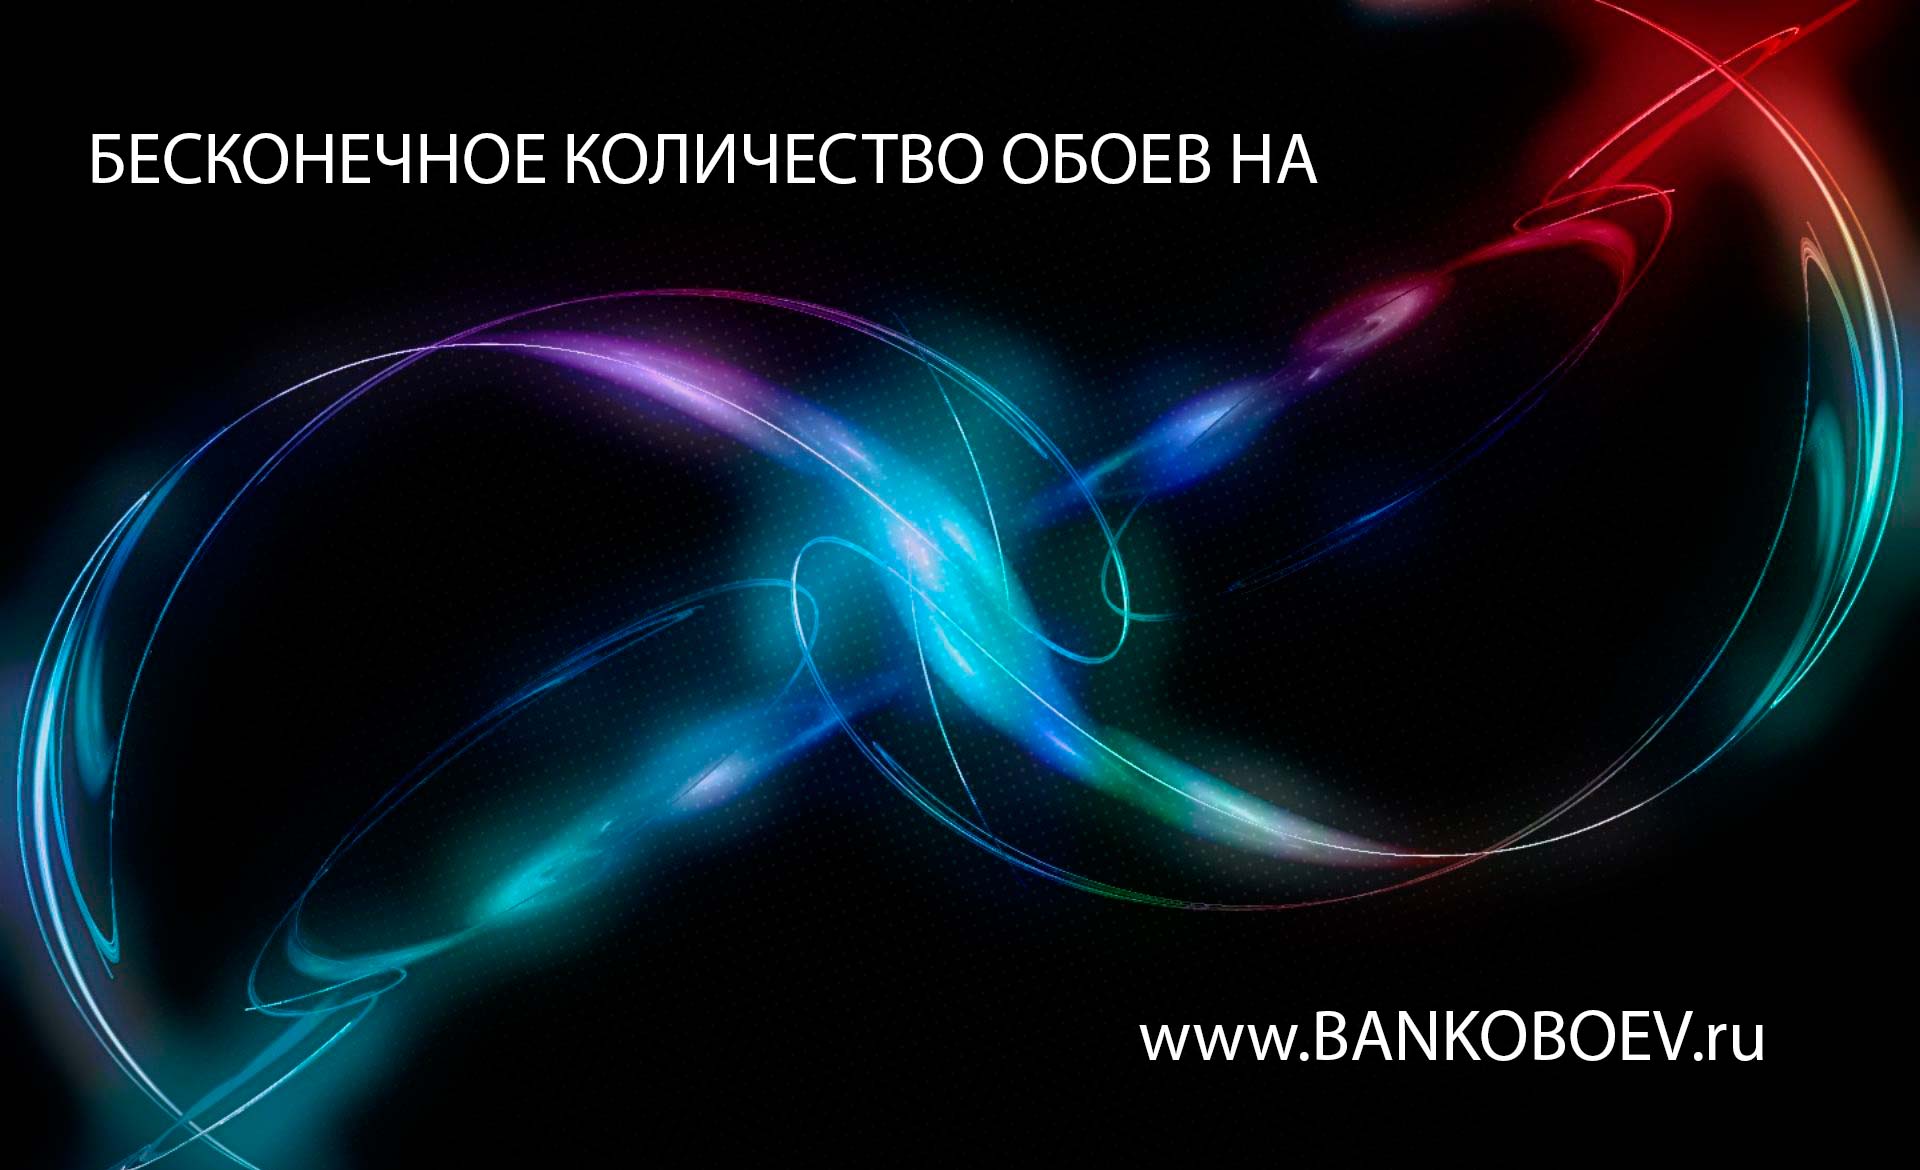 Source Bankoboev Ru Image Mjg4oduz